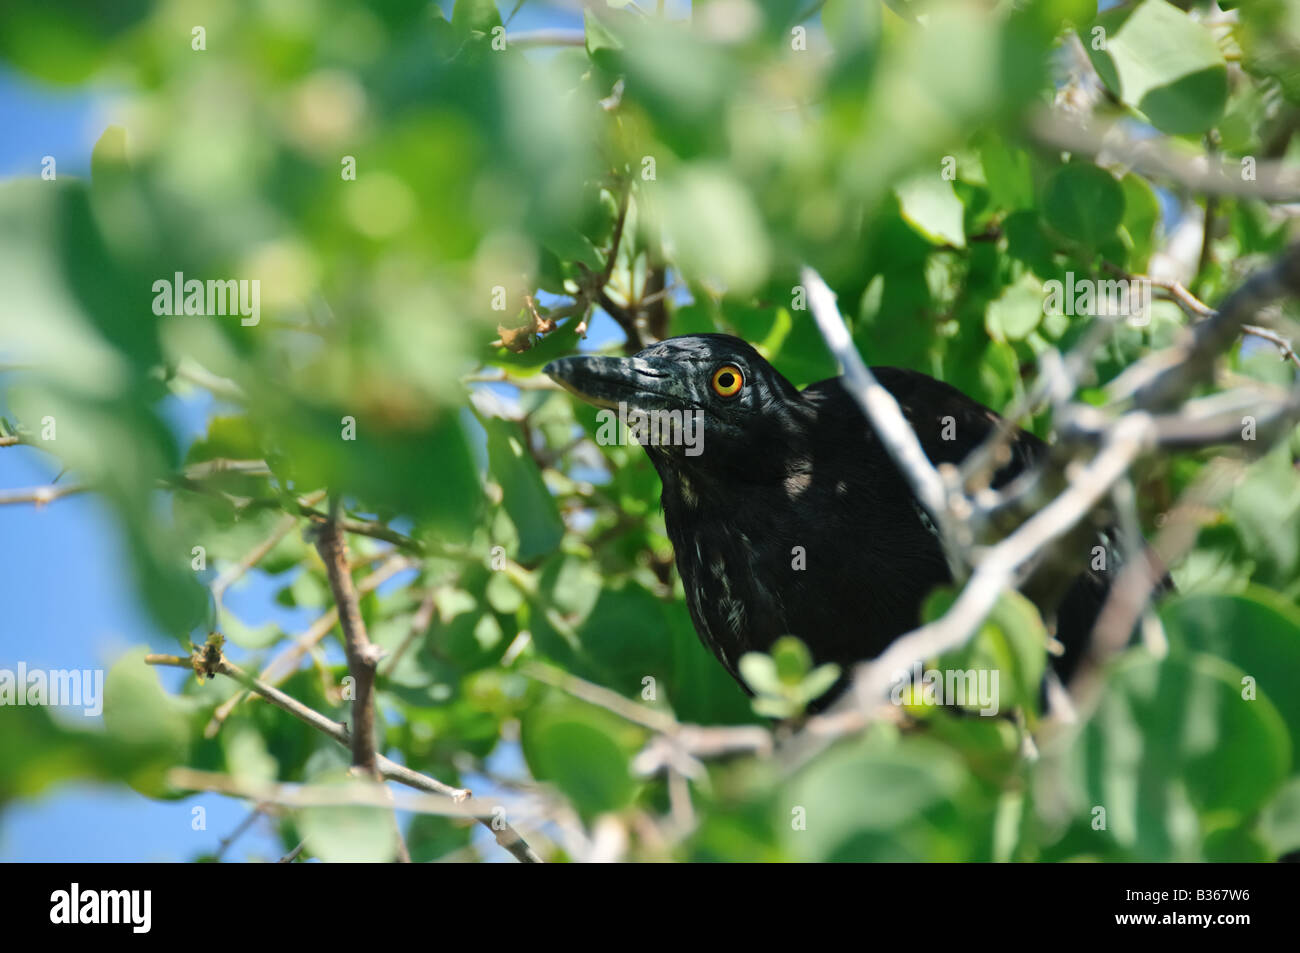 A large black bird with vivid yellow eyes hides within a bush in Ecuador's Galapagos Islands. Stock Photo